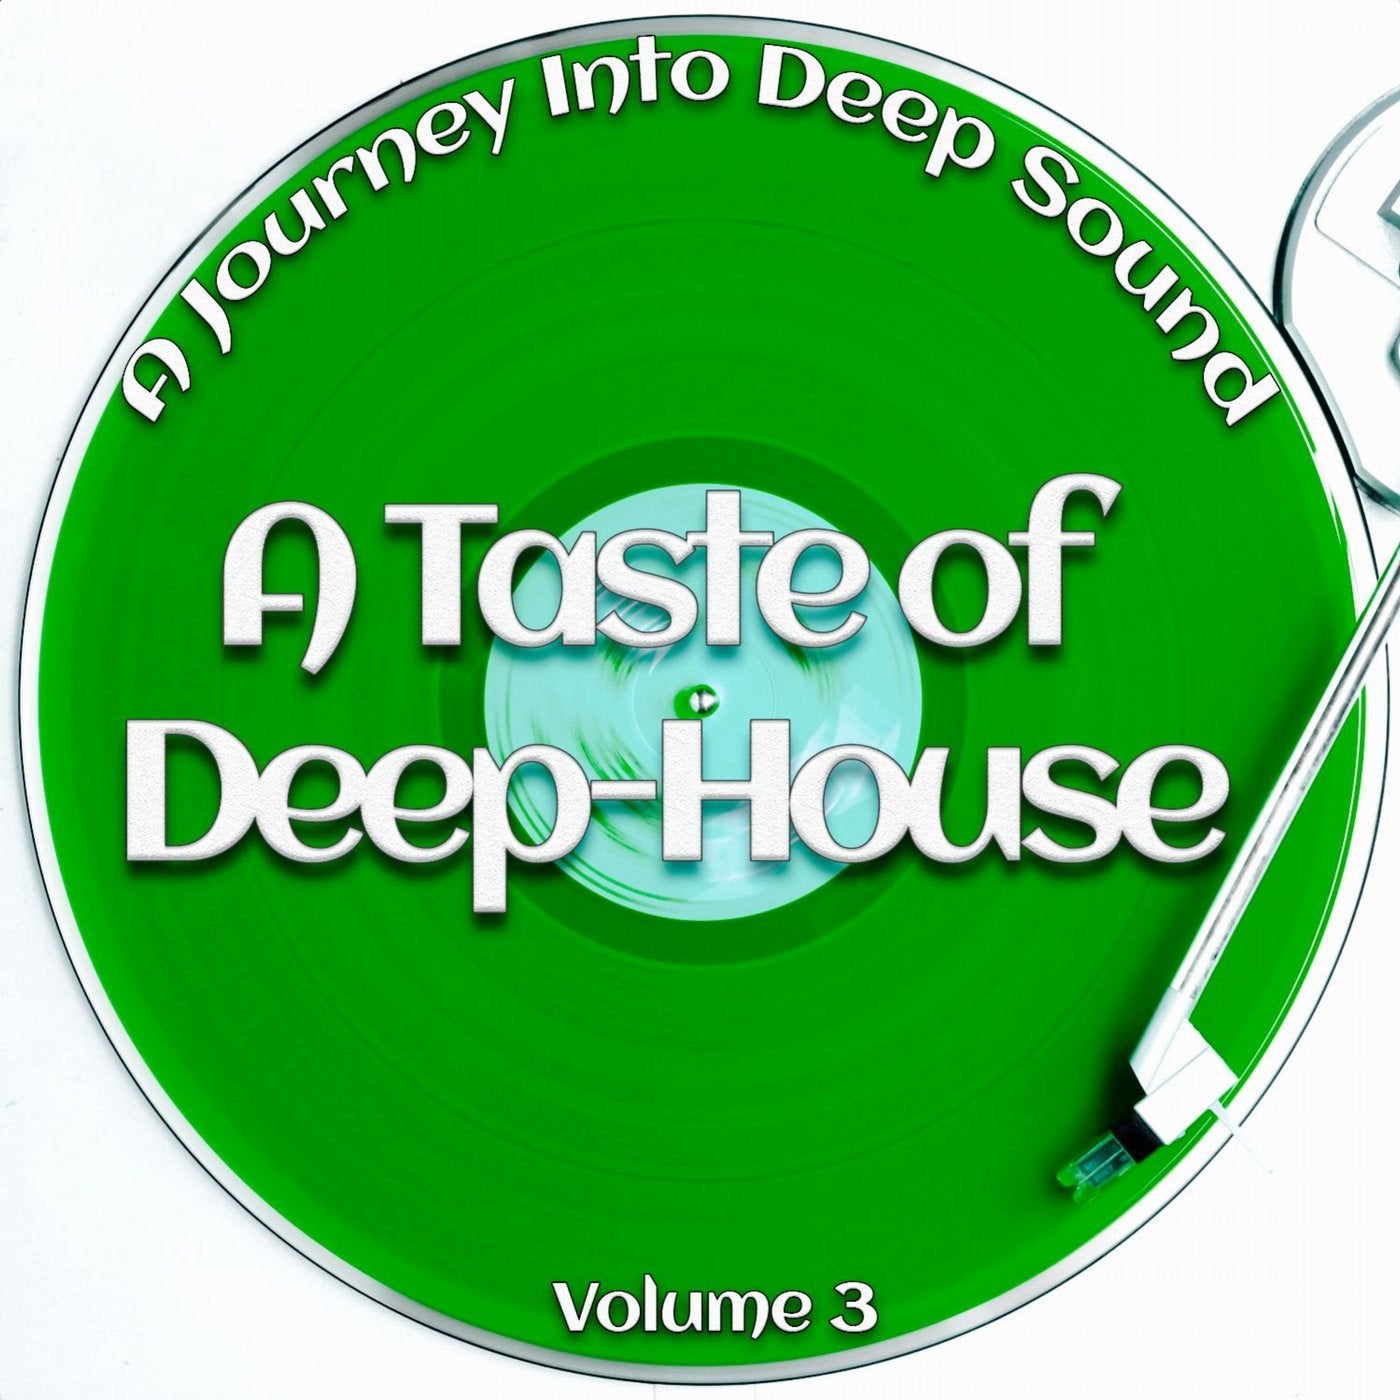 A Taste of Deep-House, Vol. 3 (A Journey into Deep Sound)